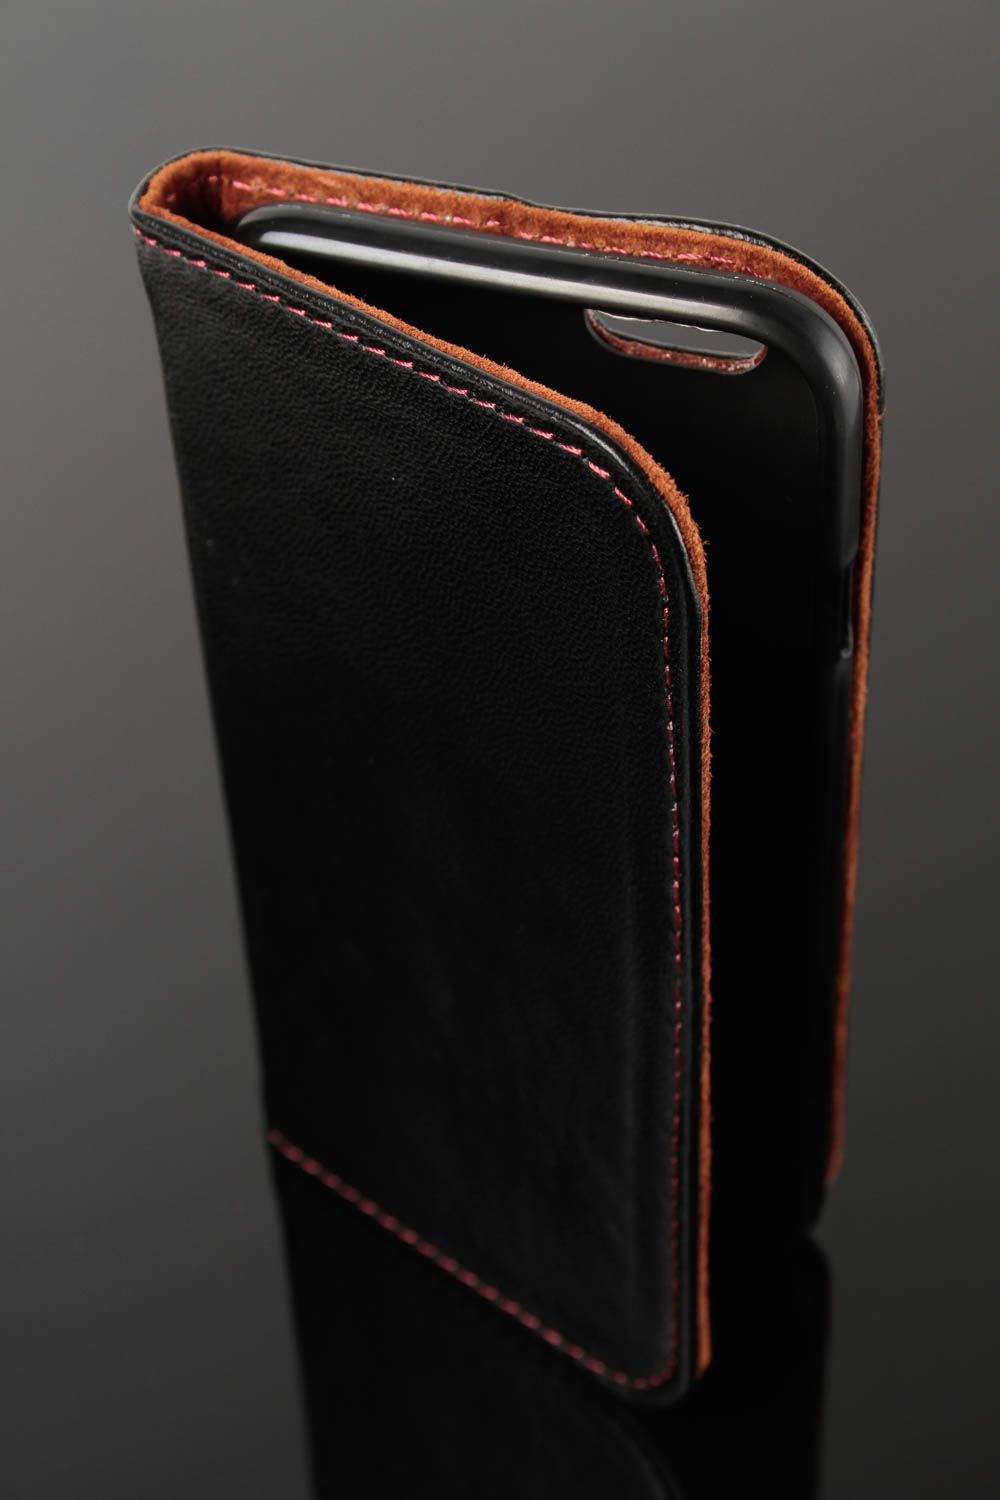 Stylish handmade leather phone case fashion accessories best gift ideas  photo 2